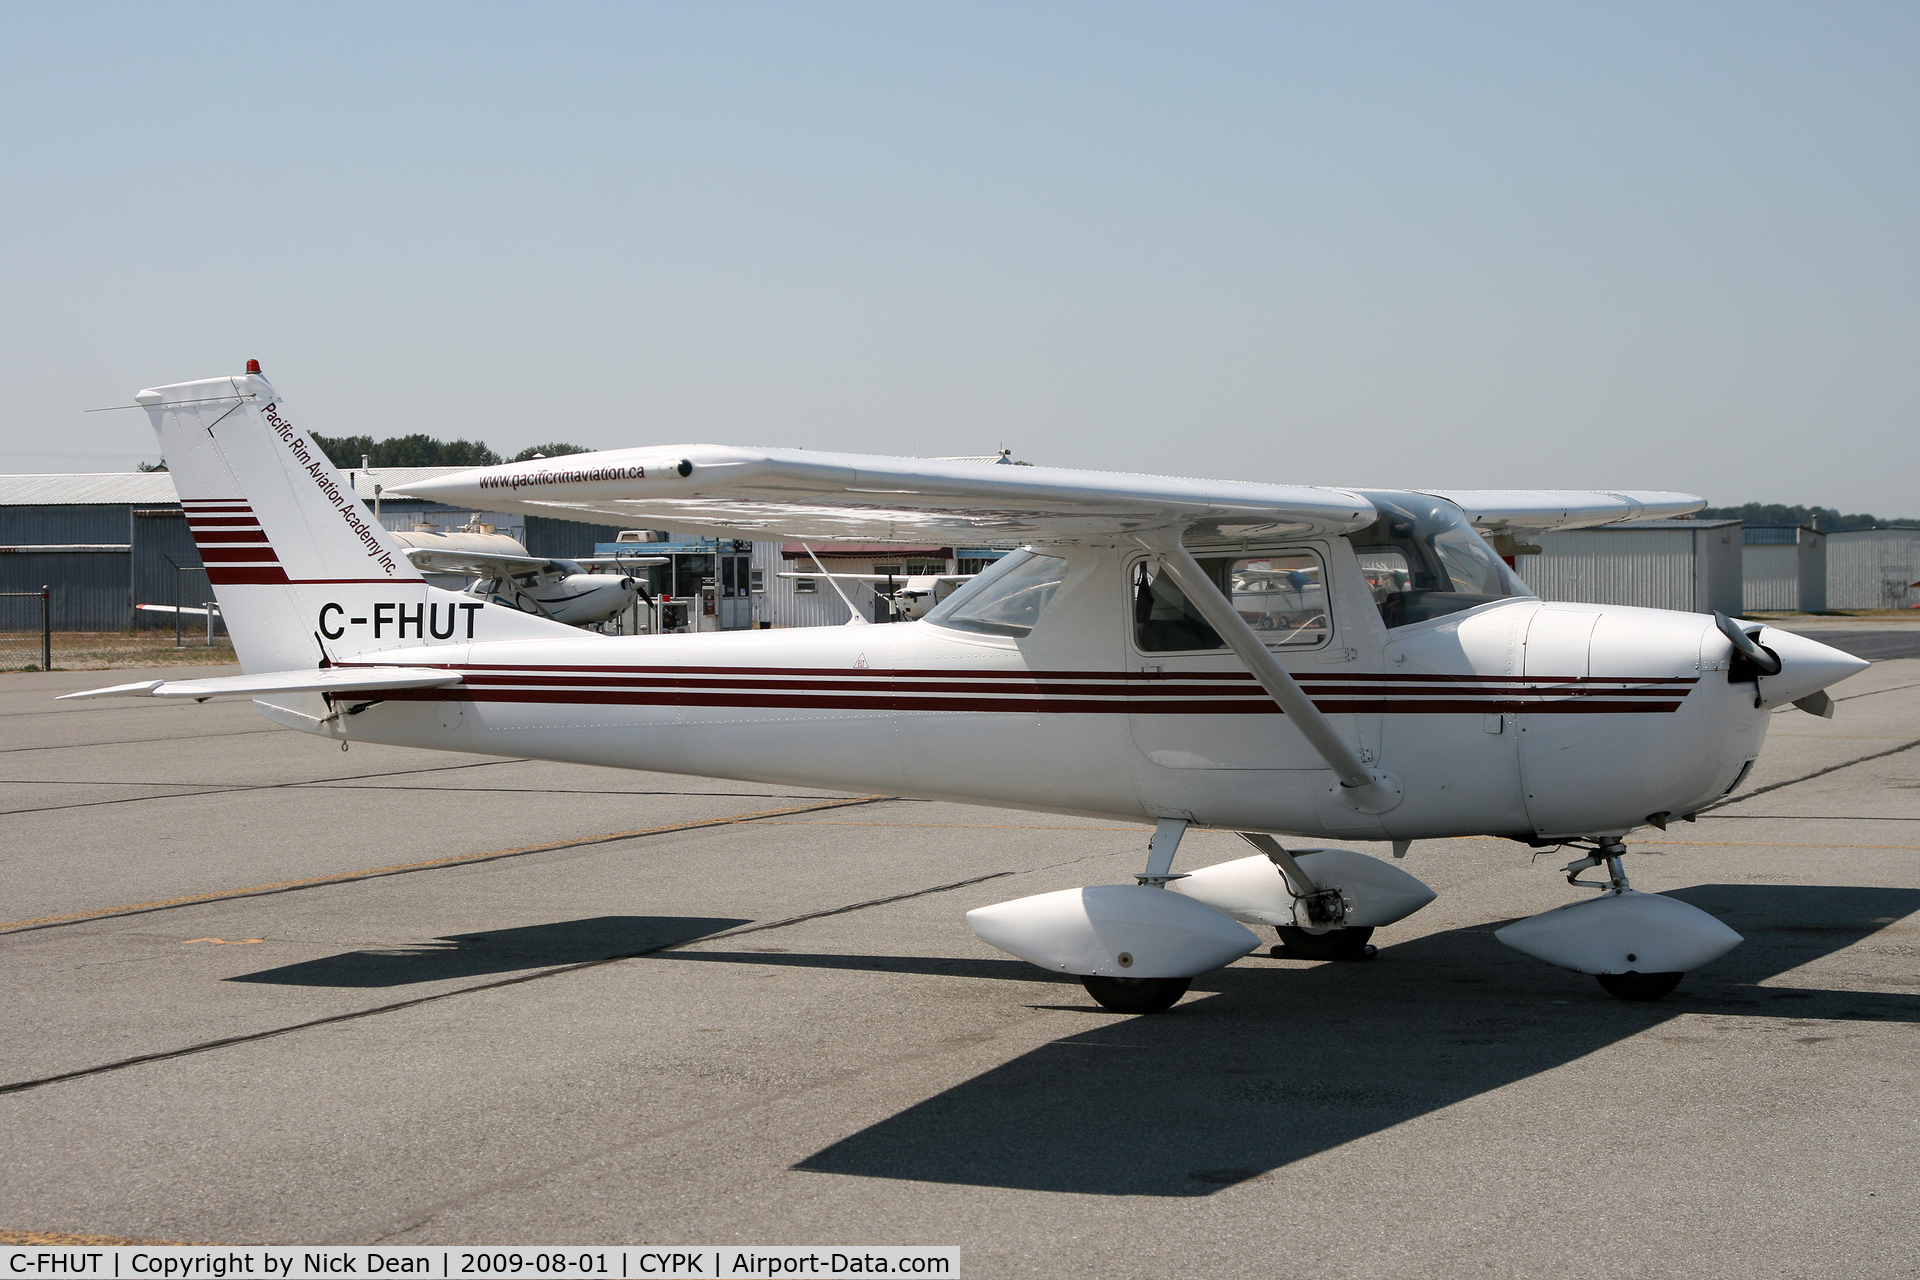 C-FHUT, 1969 Cessna 150J C/N 15070707, CYPK